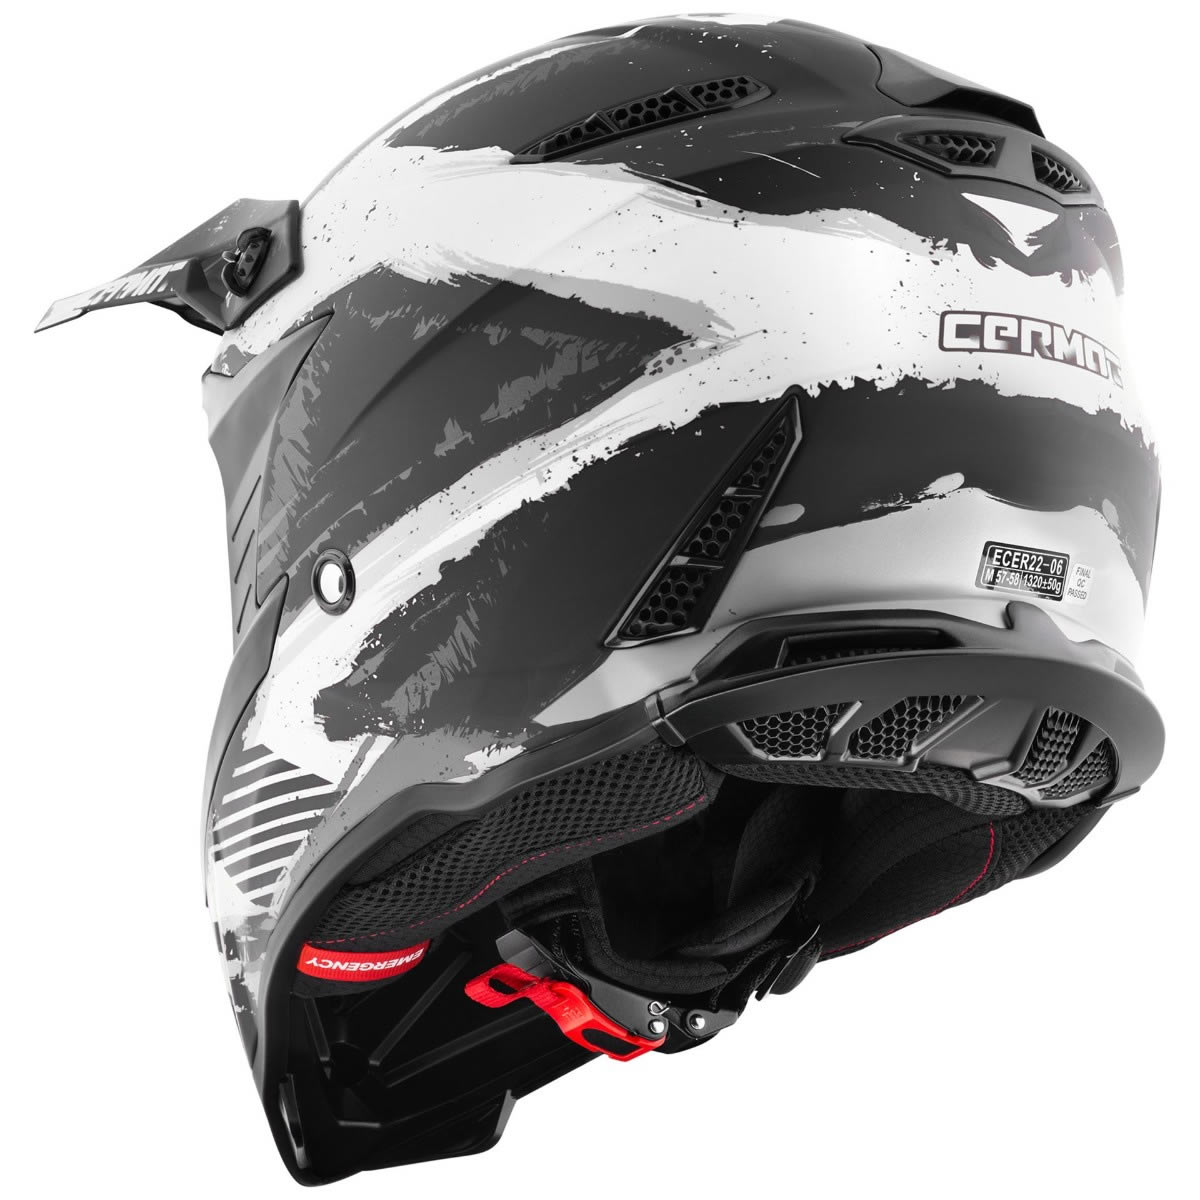 Germot GM 540 Helm, schwarz-weiß-grau matt